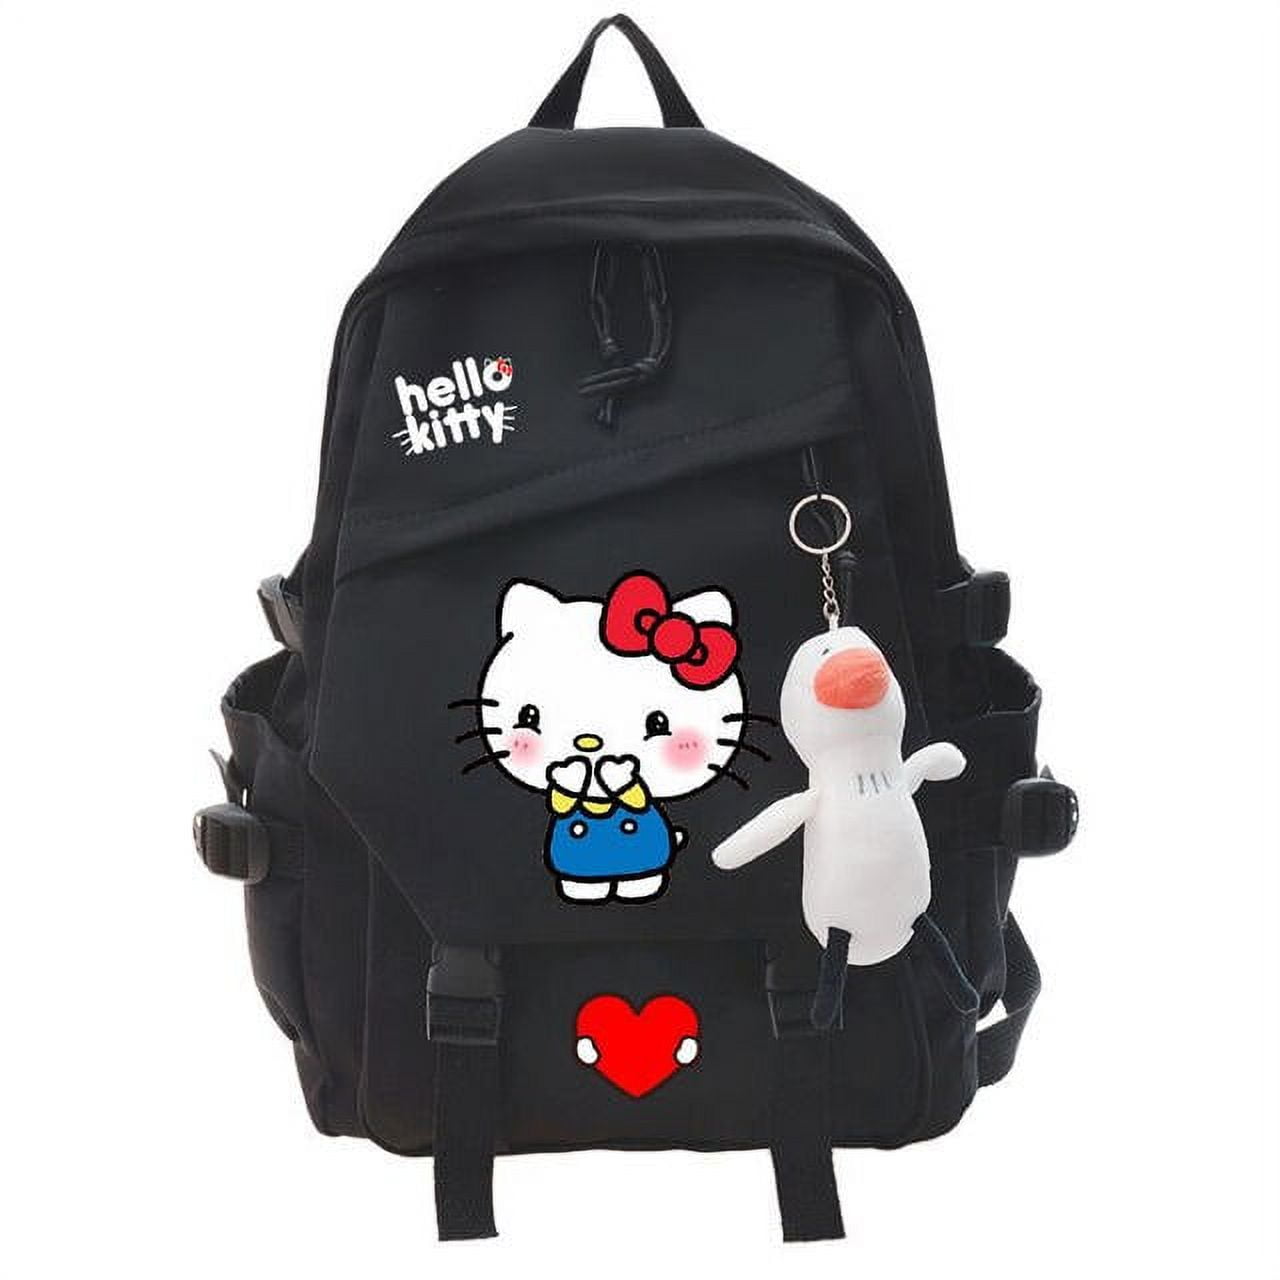 Hello kitty backpack Girl cute school bag cartoon student kid bag no pendant